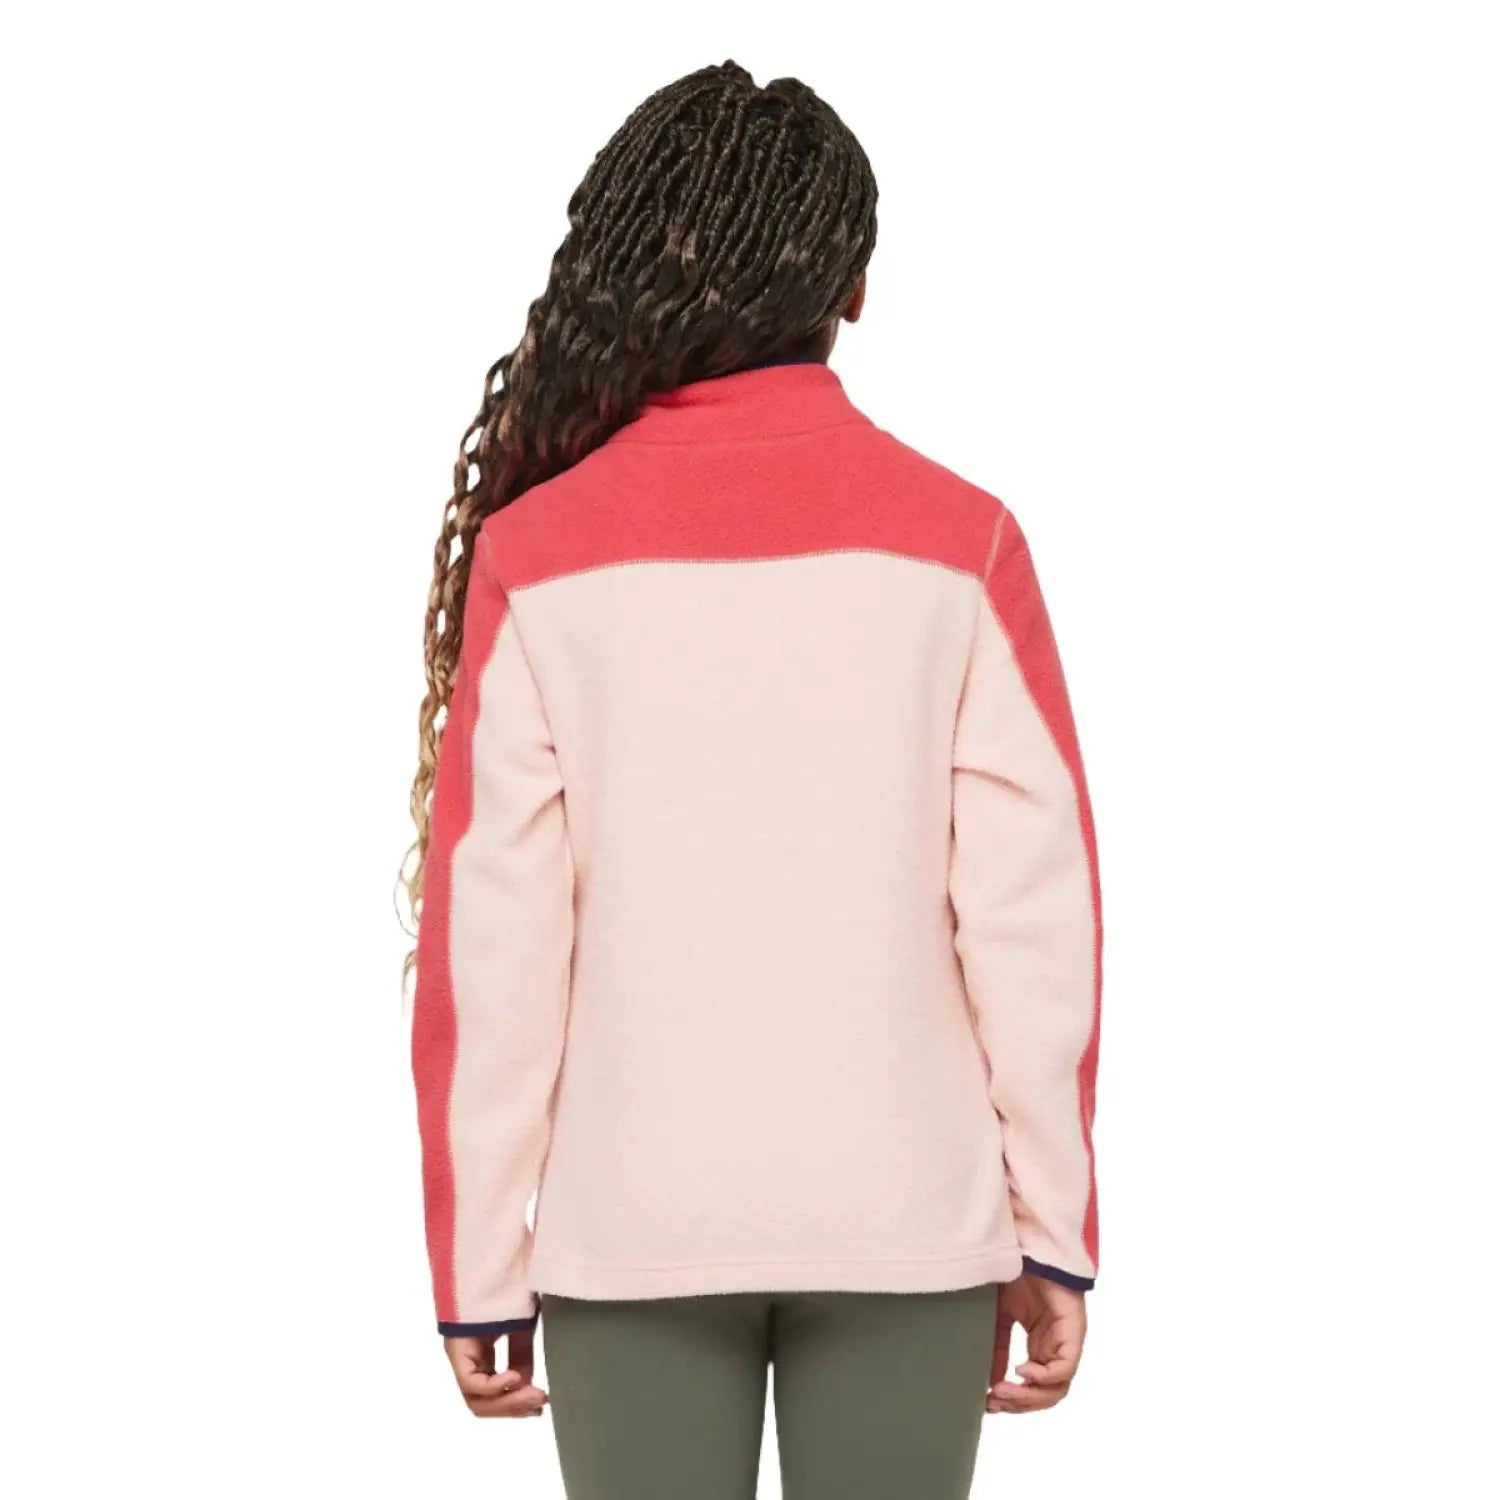 Cotopaxi K's Abrazo Half-Zip Fleece Jacket, Strawberry Rosewood, back view on model 